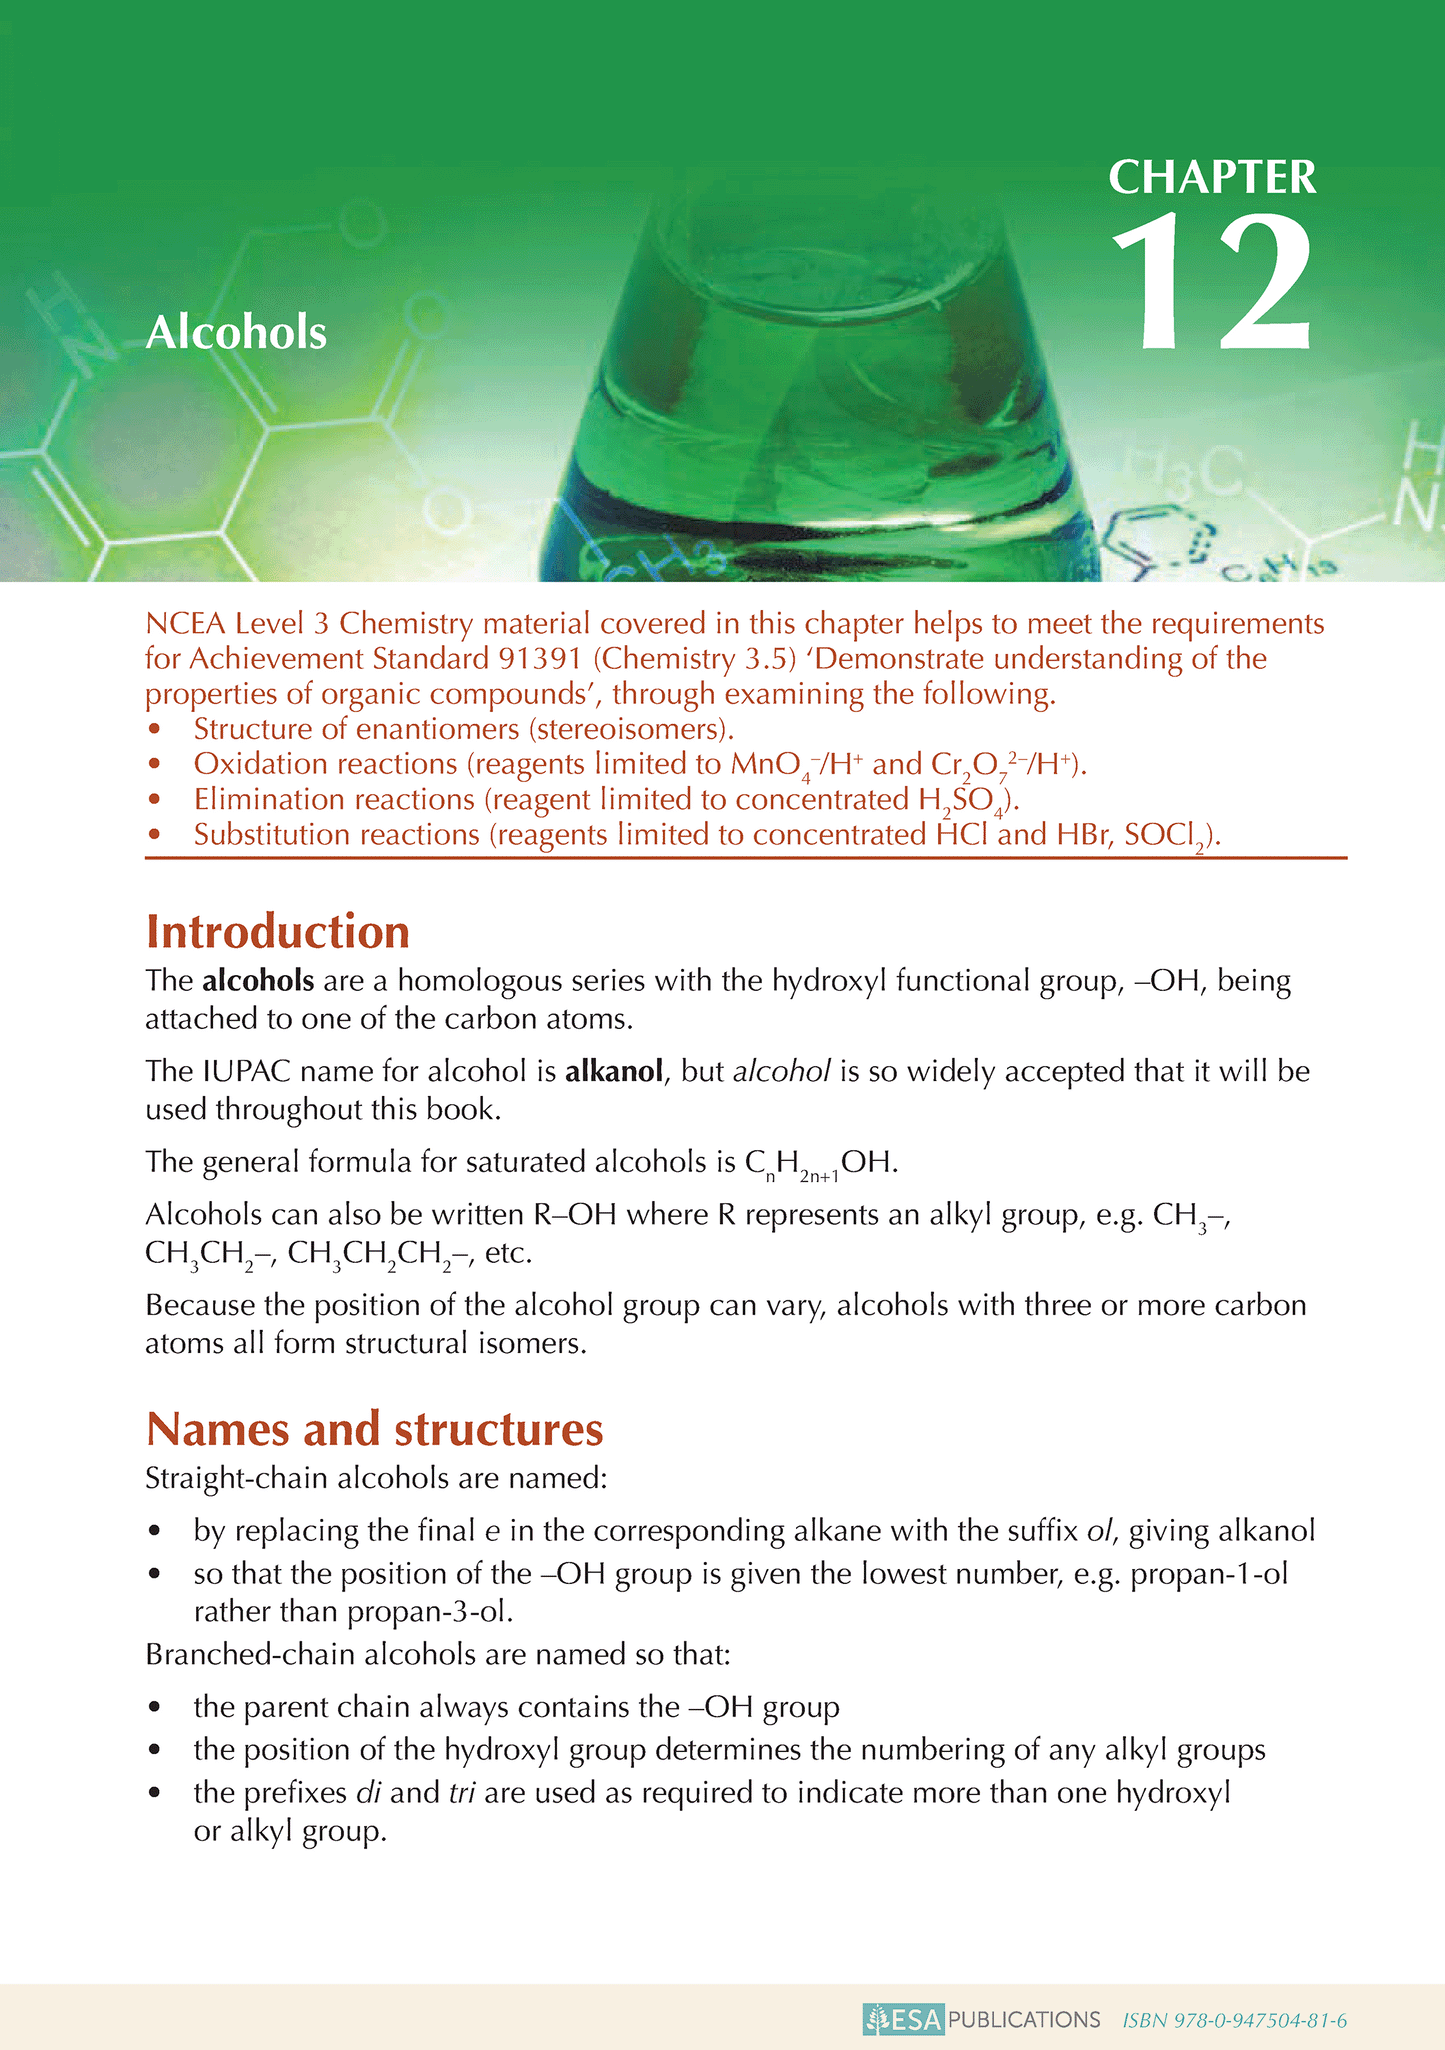 Level 3 Chemistry ESA Study Guide